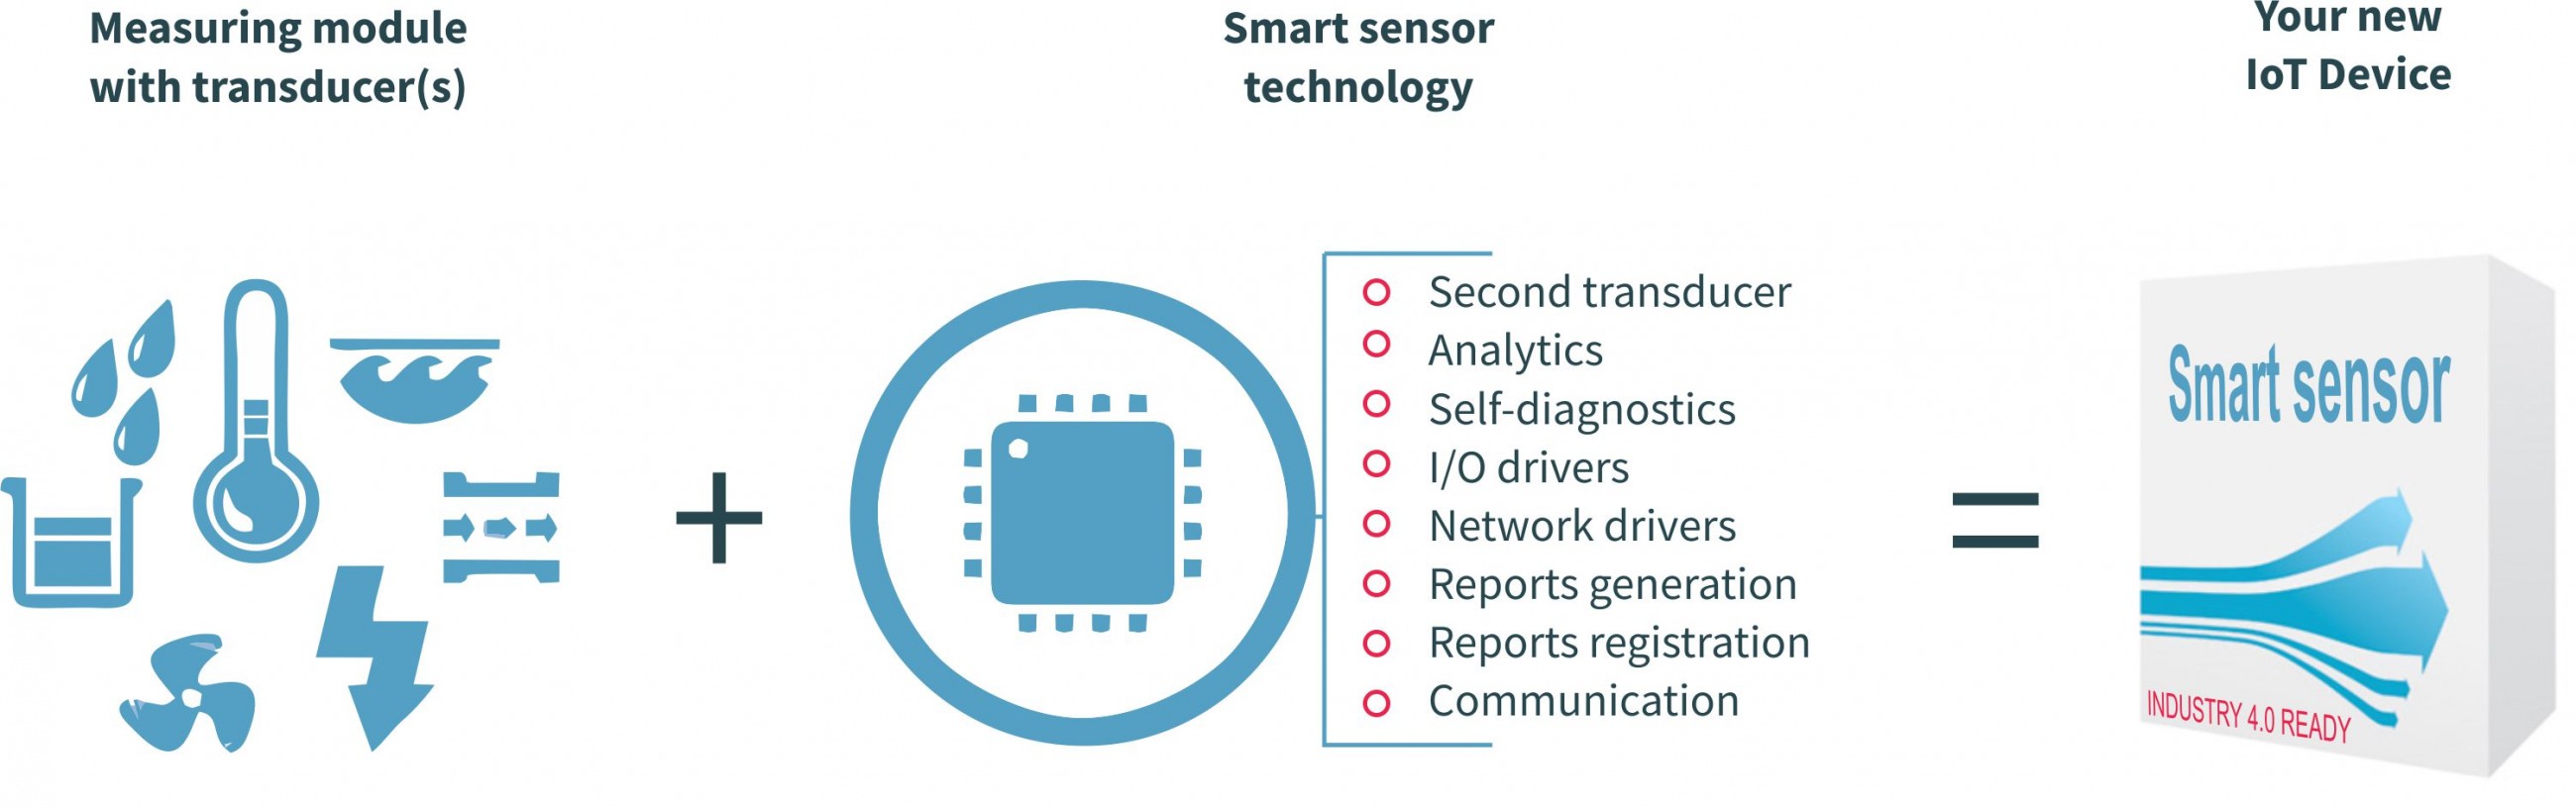 Smart sensor technology